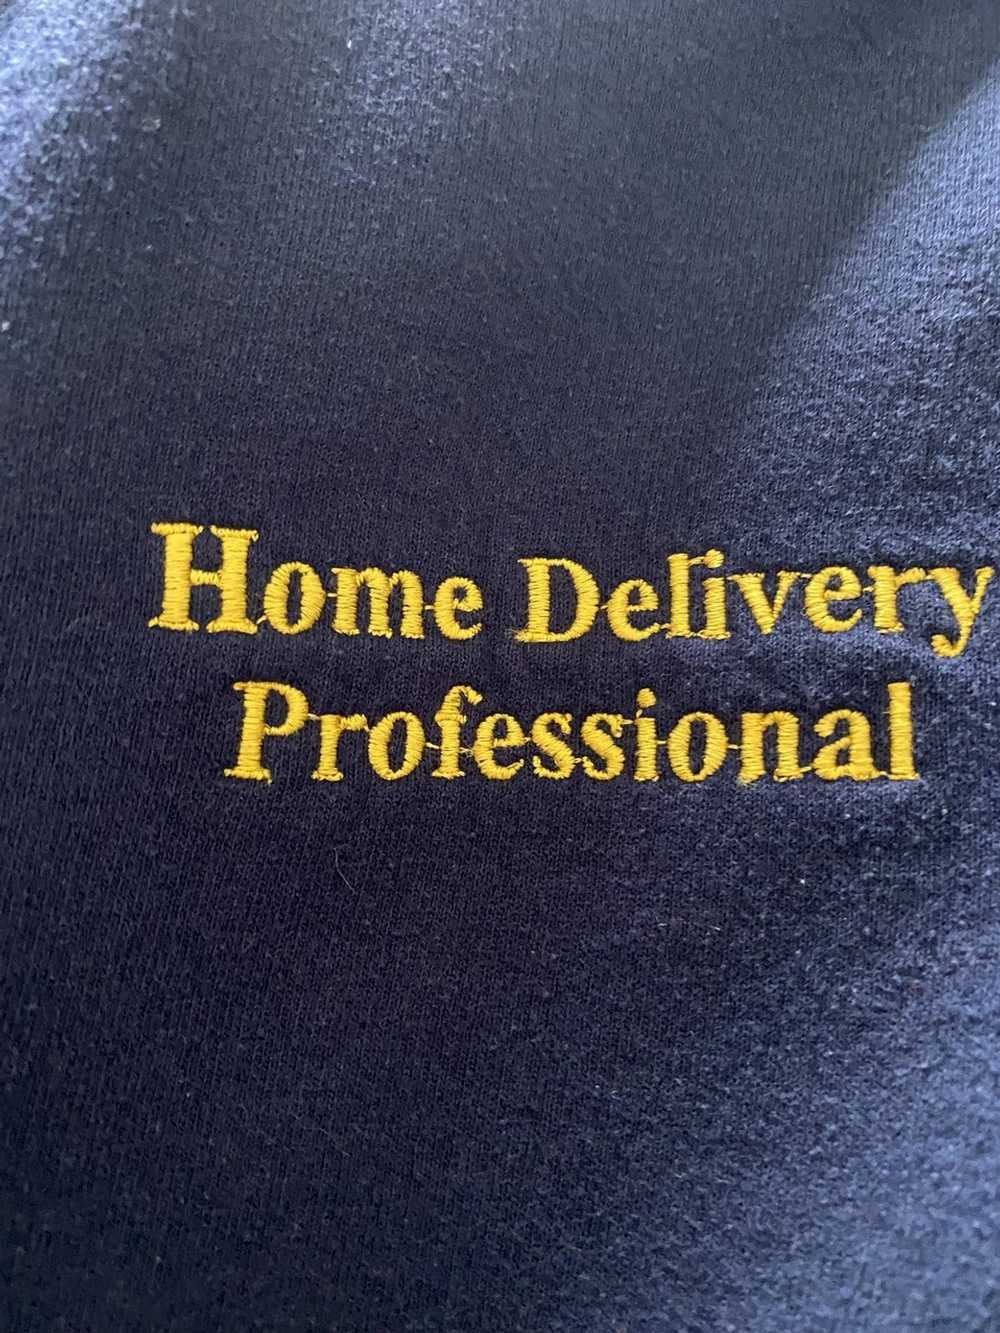 Vintage Home Delivery Professionals - image 4